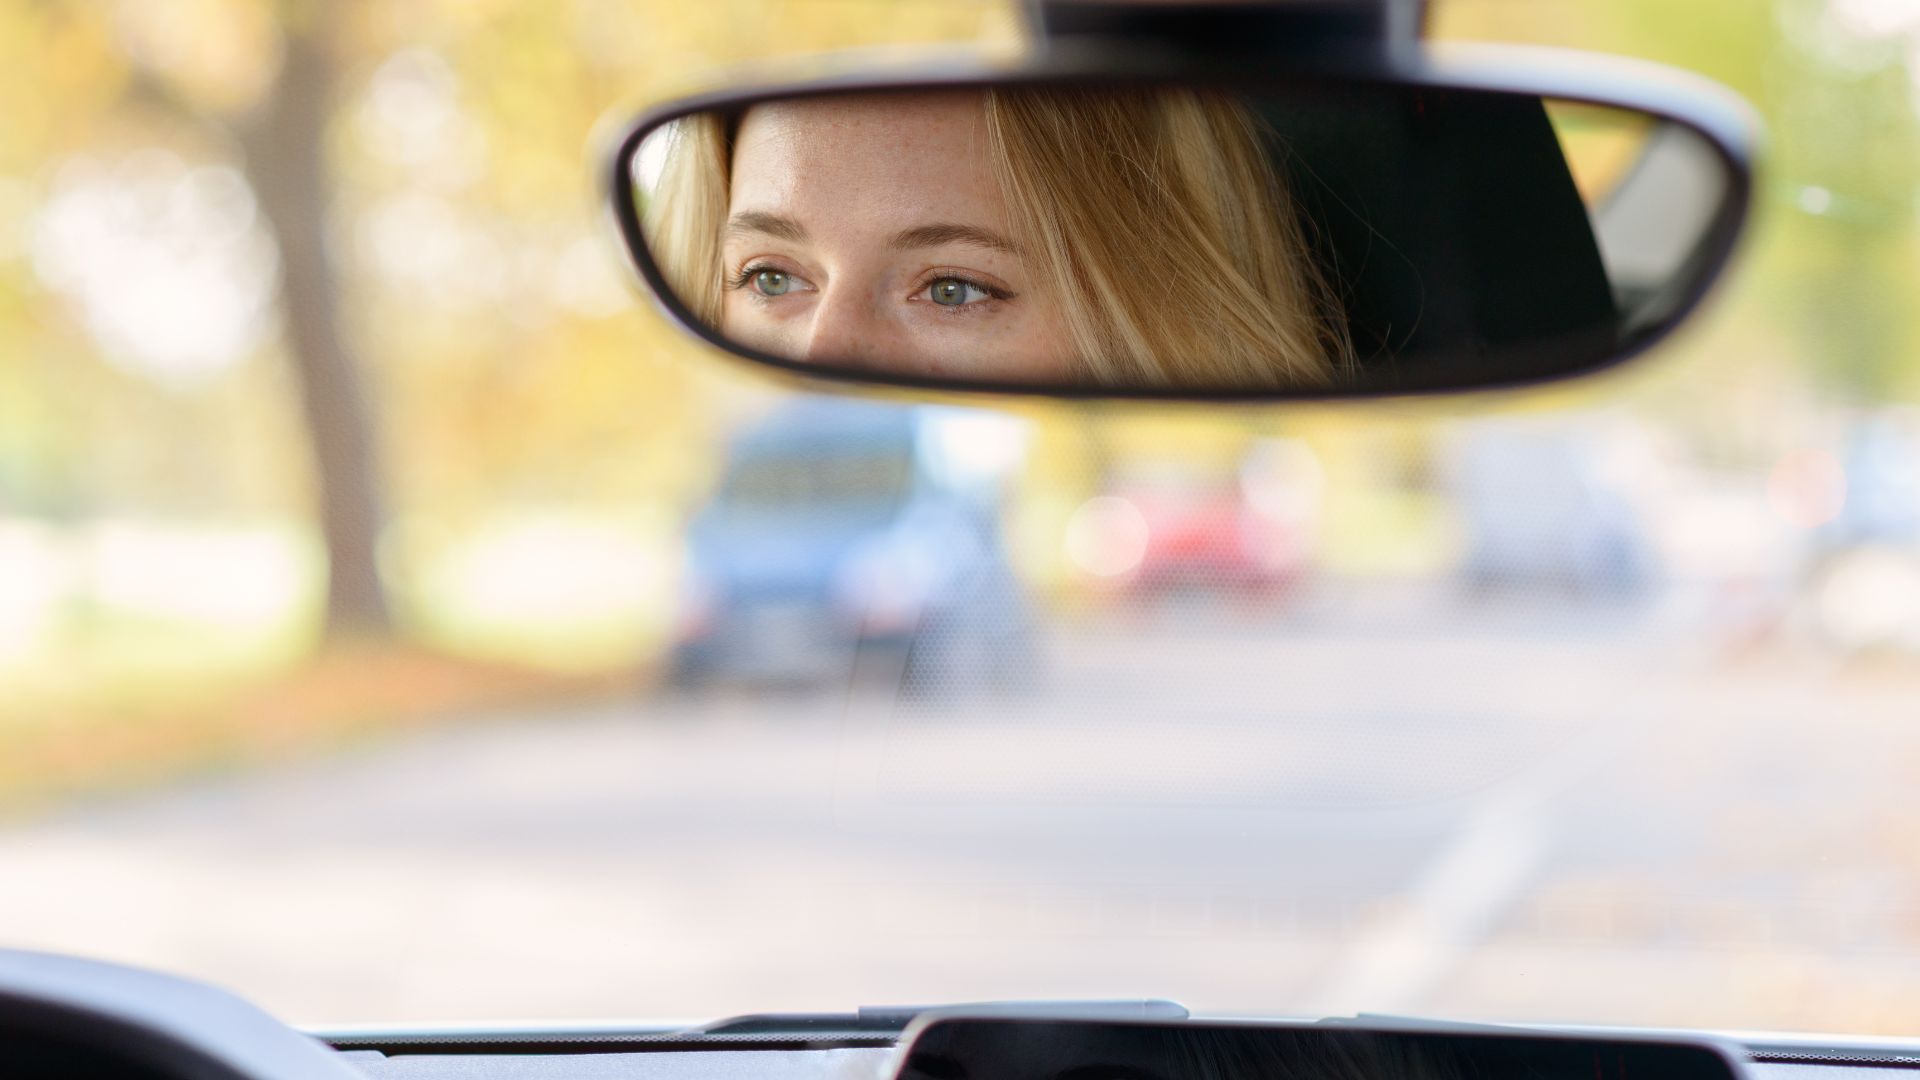 Driving eyesight